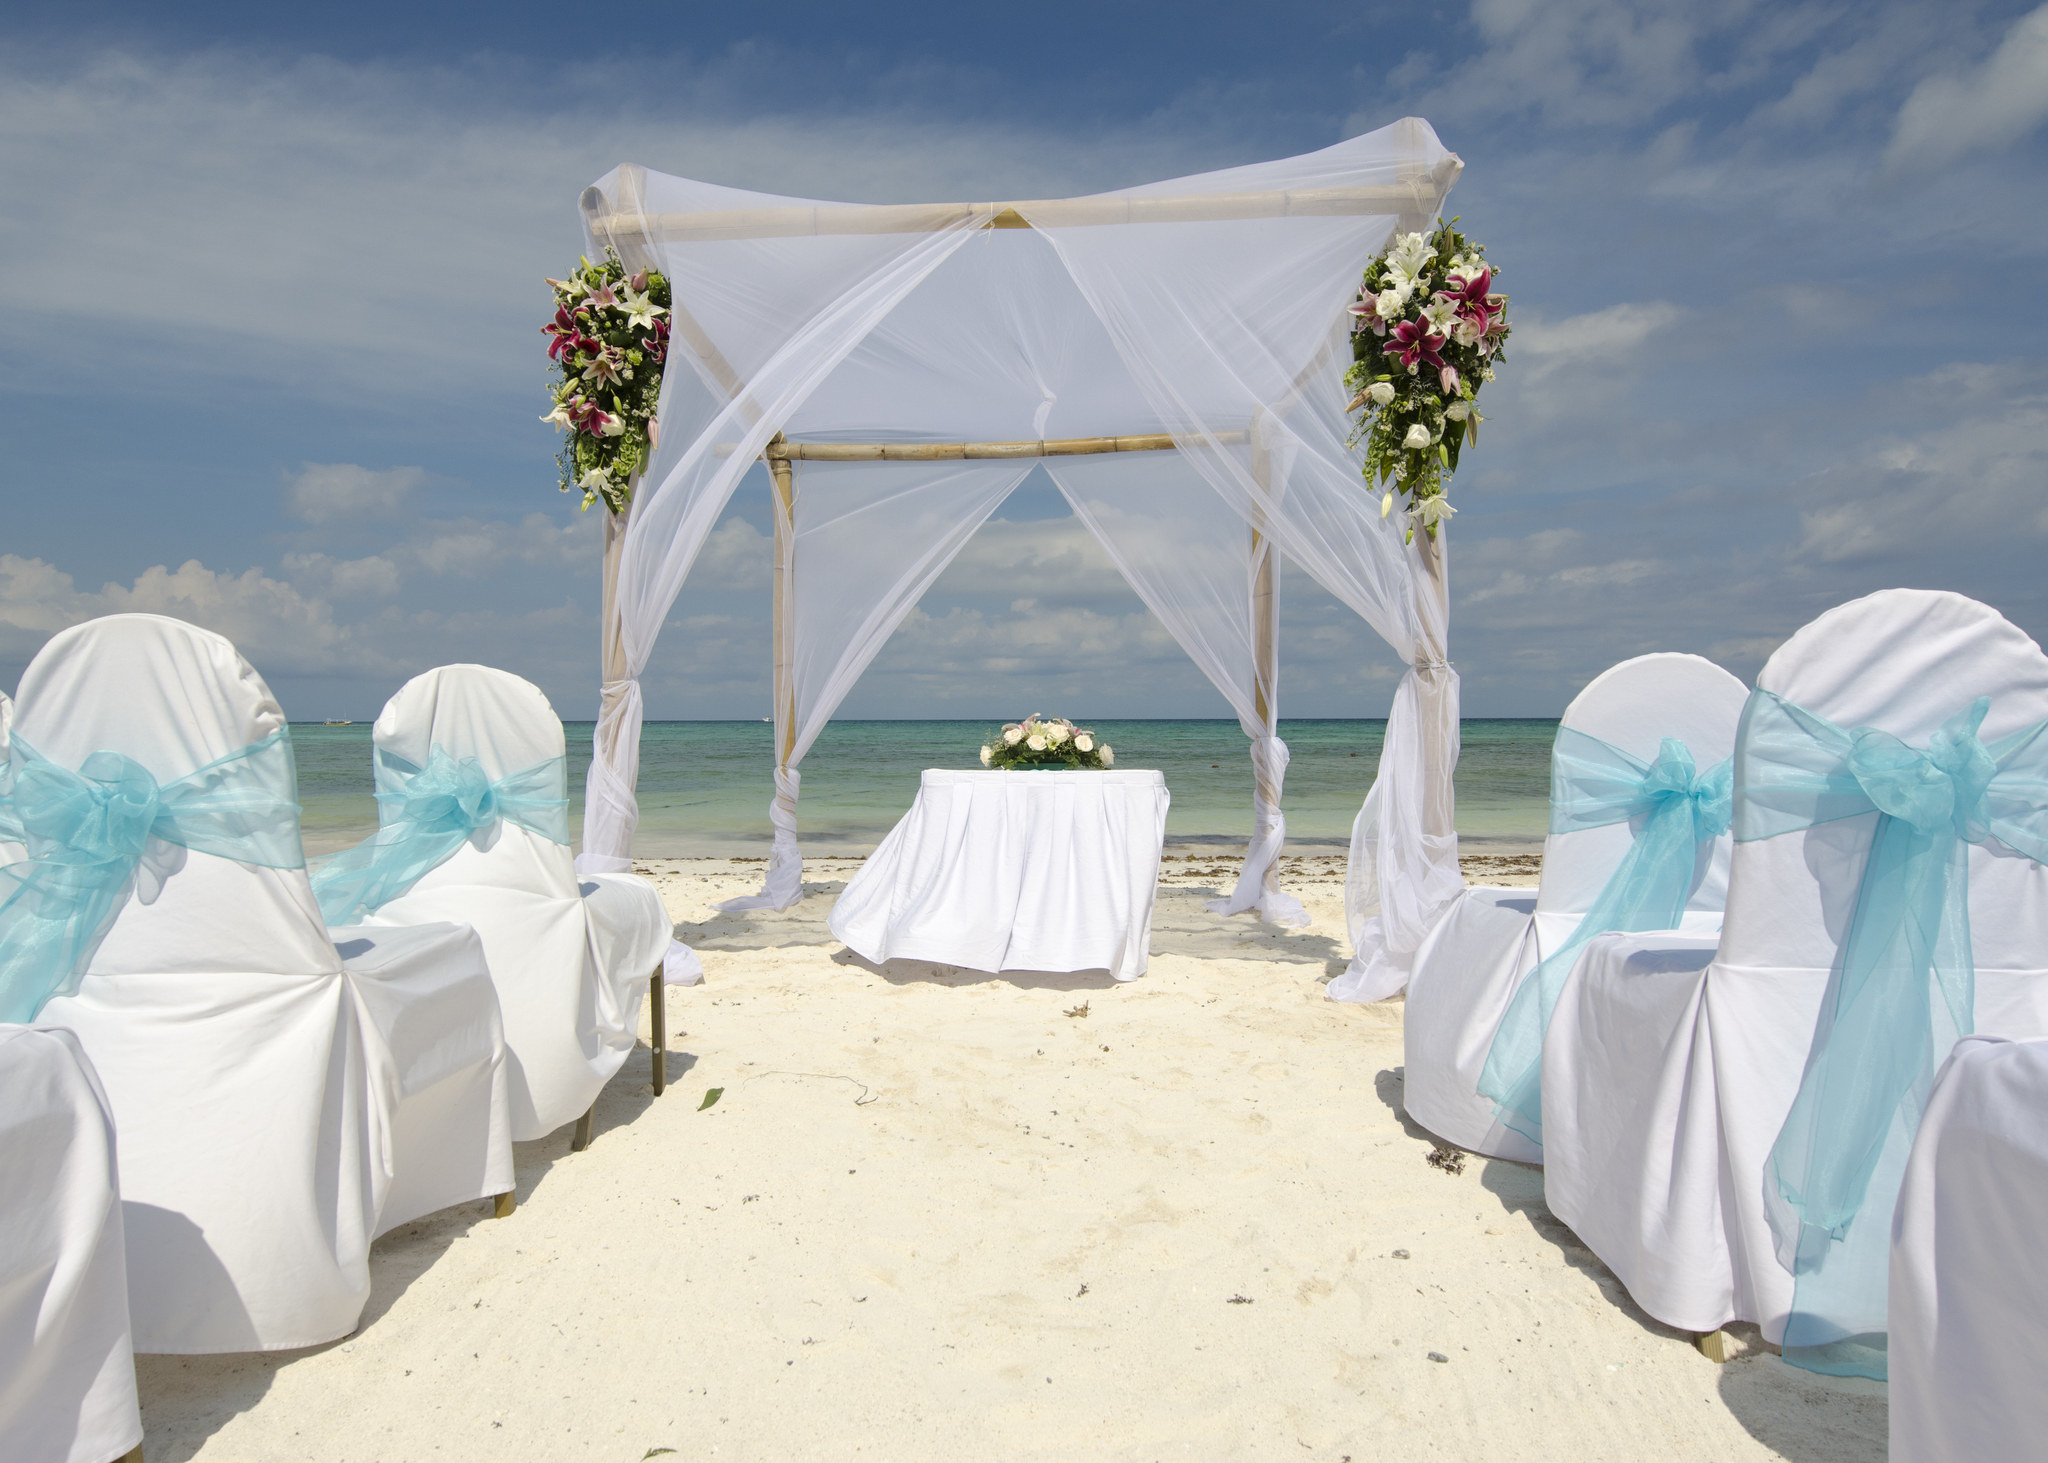 A classic beach wedding with white decor